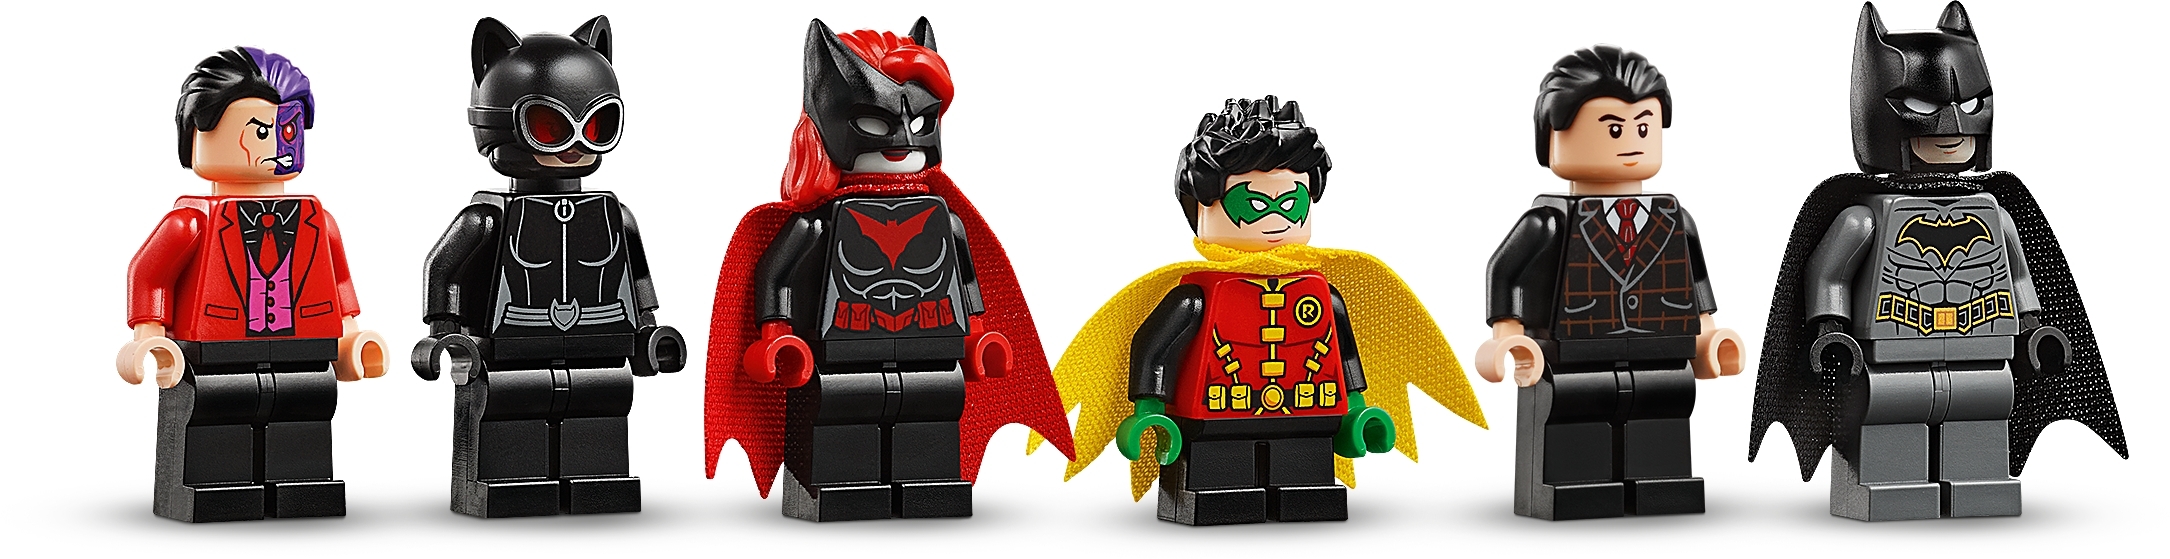 Batcave Clayface™ Invasion 76122 | Batman™ | Buy online at the Official LEGO®  Shop US